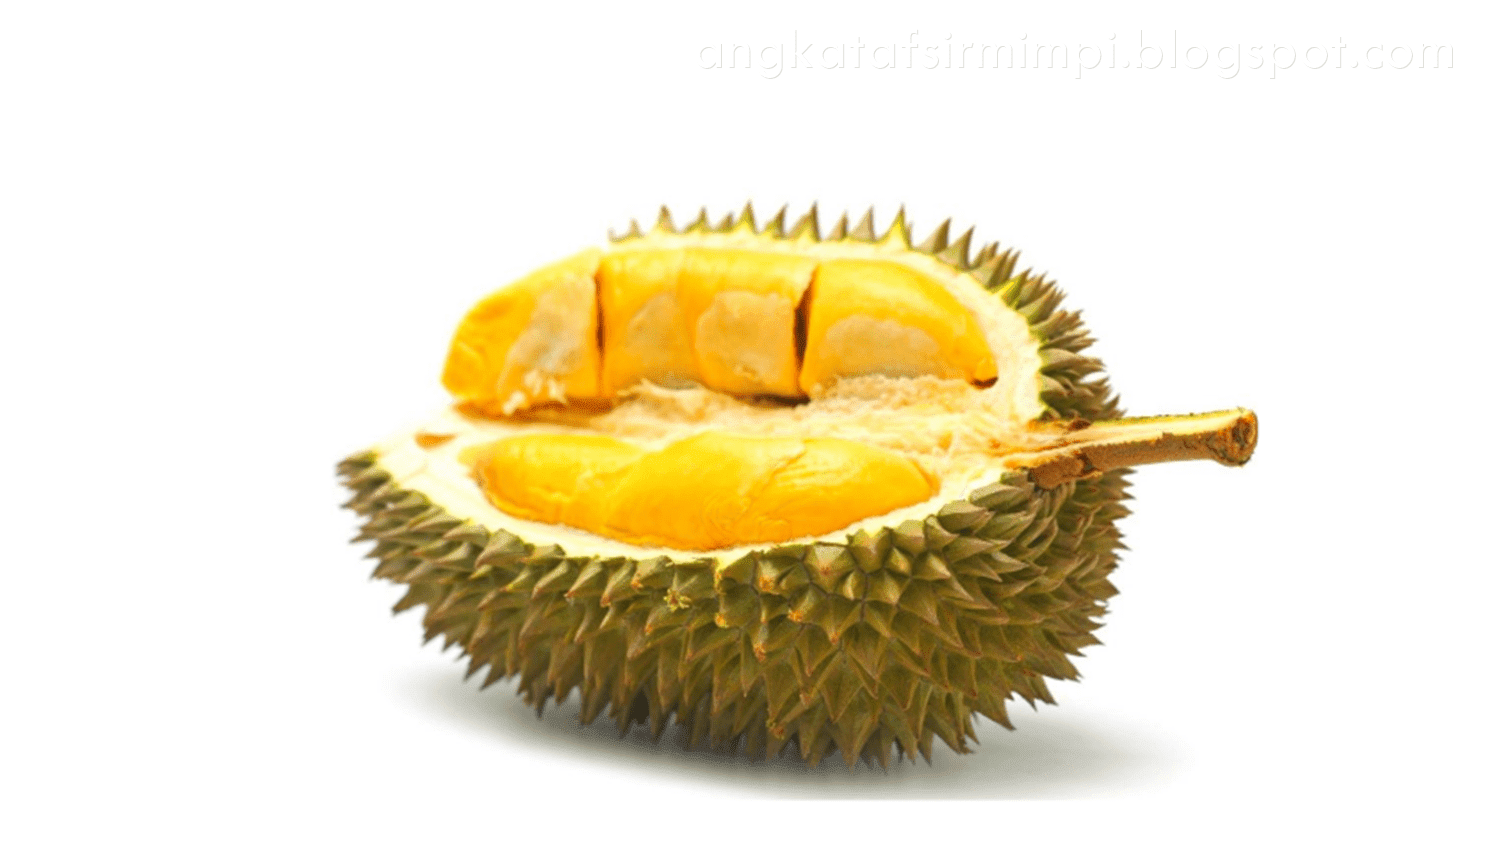 ♐ Mimpi beli durian togel